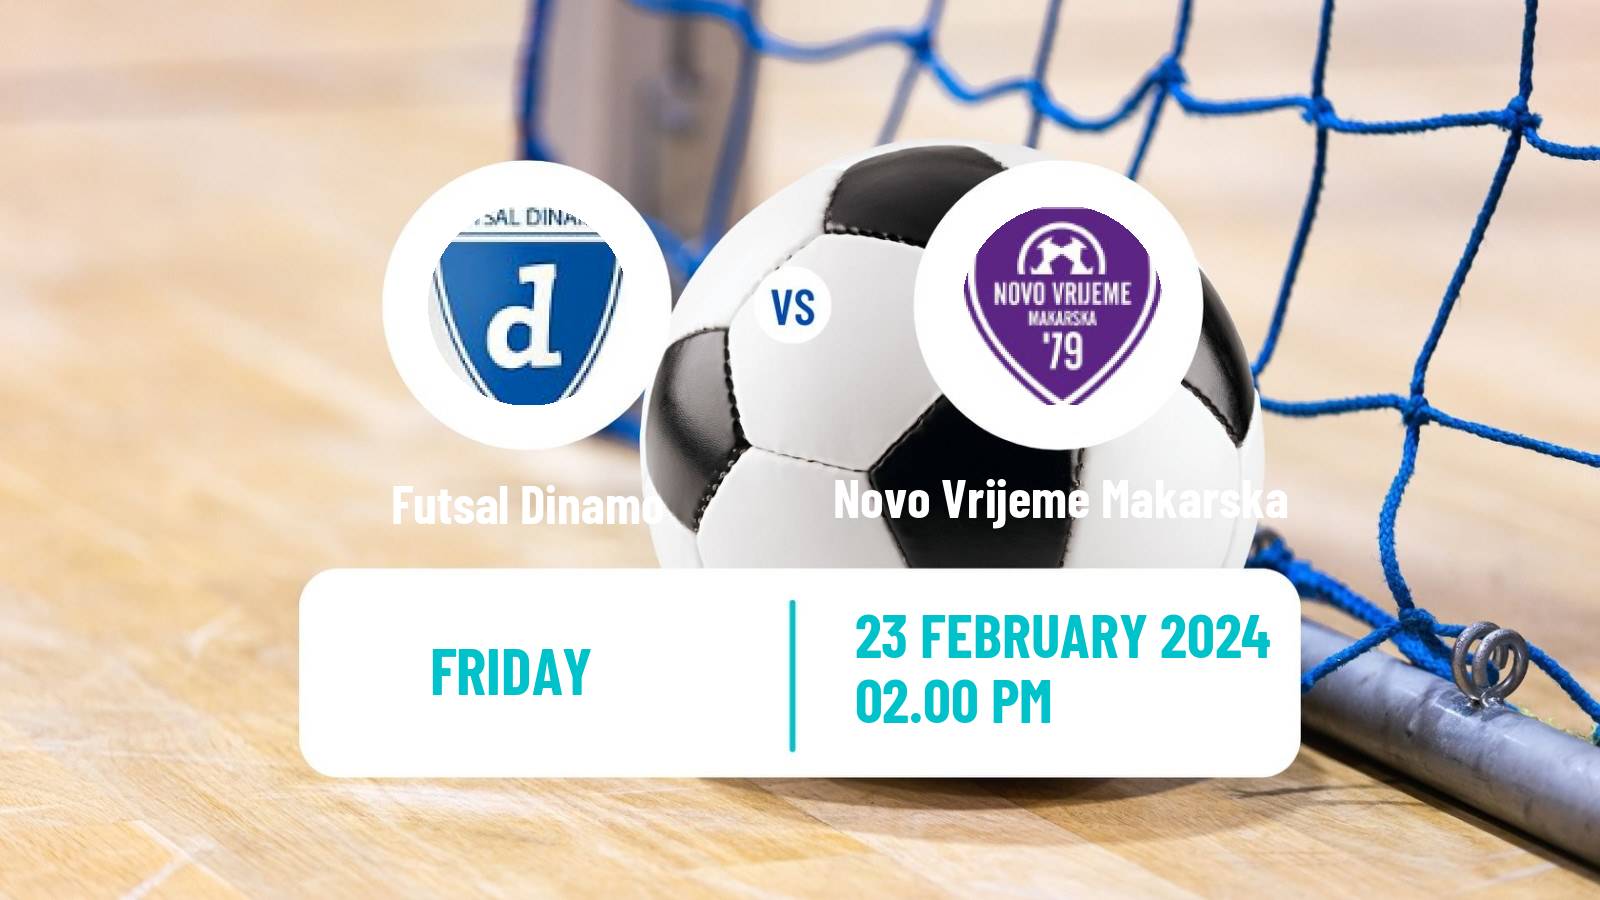 Futsal Croatian 1 HMNL Futsal Dinamo - Novo Vrijeme Makarska